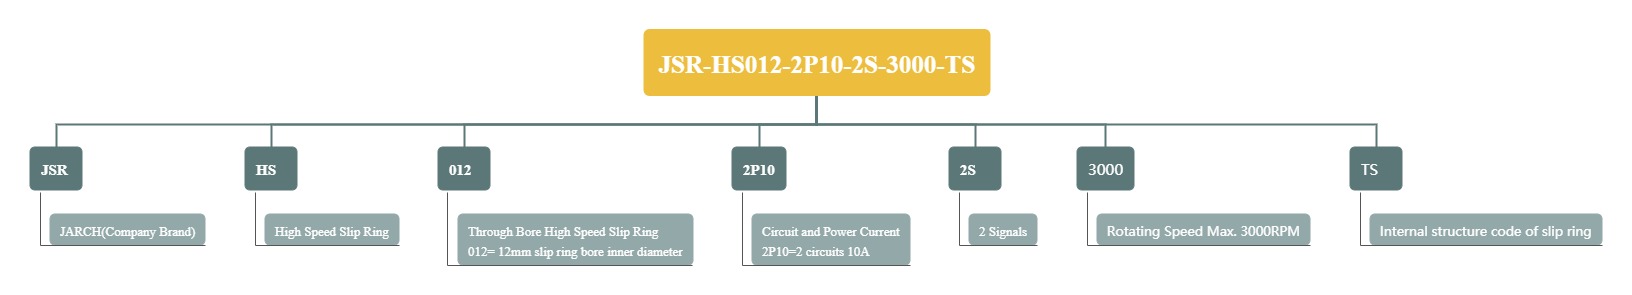 JSR-HS012-2P10-2S-3000-TS.jpg